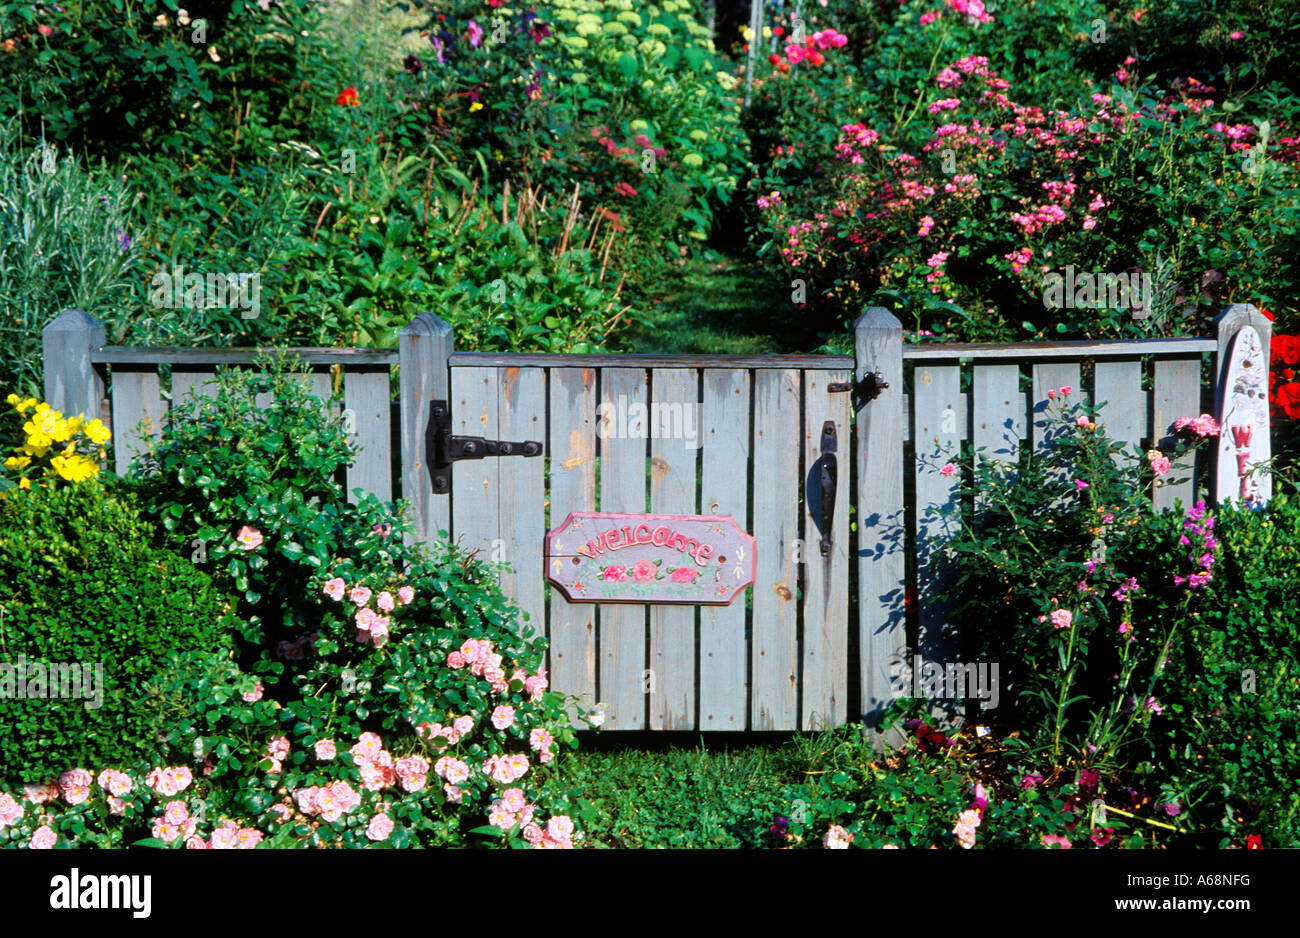 Benvenuti giardino rose garden gate Foto Stock